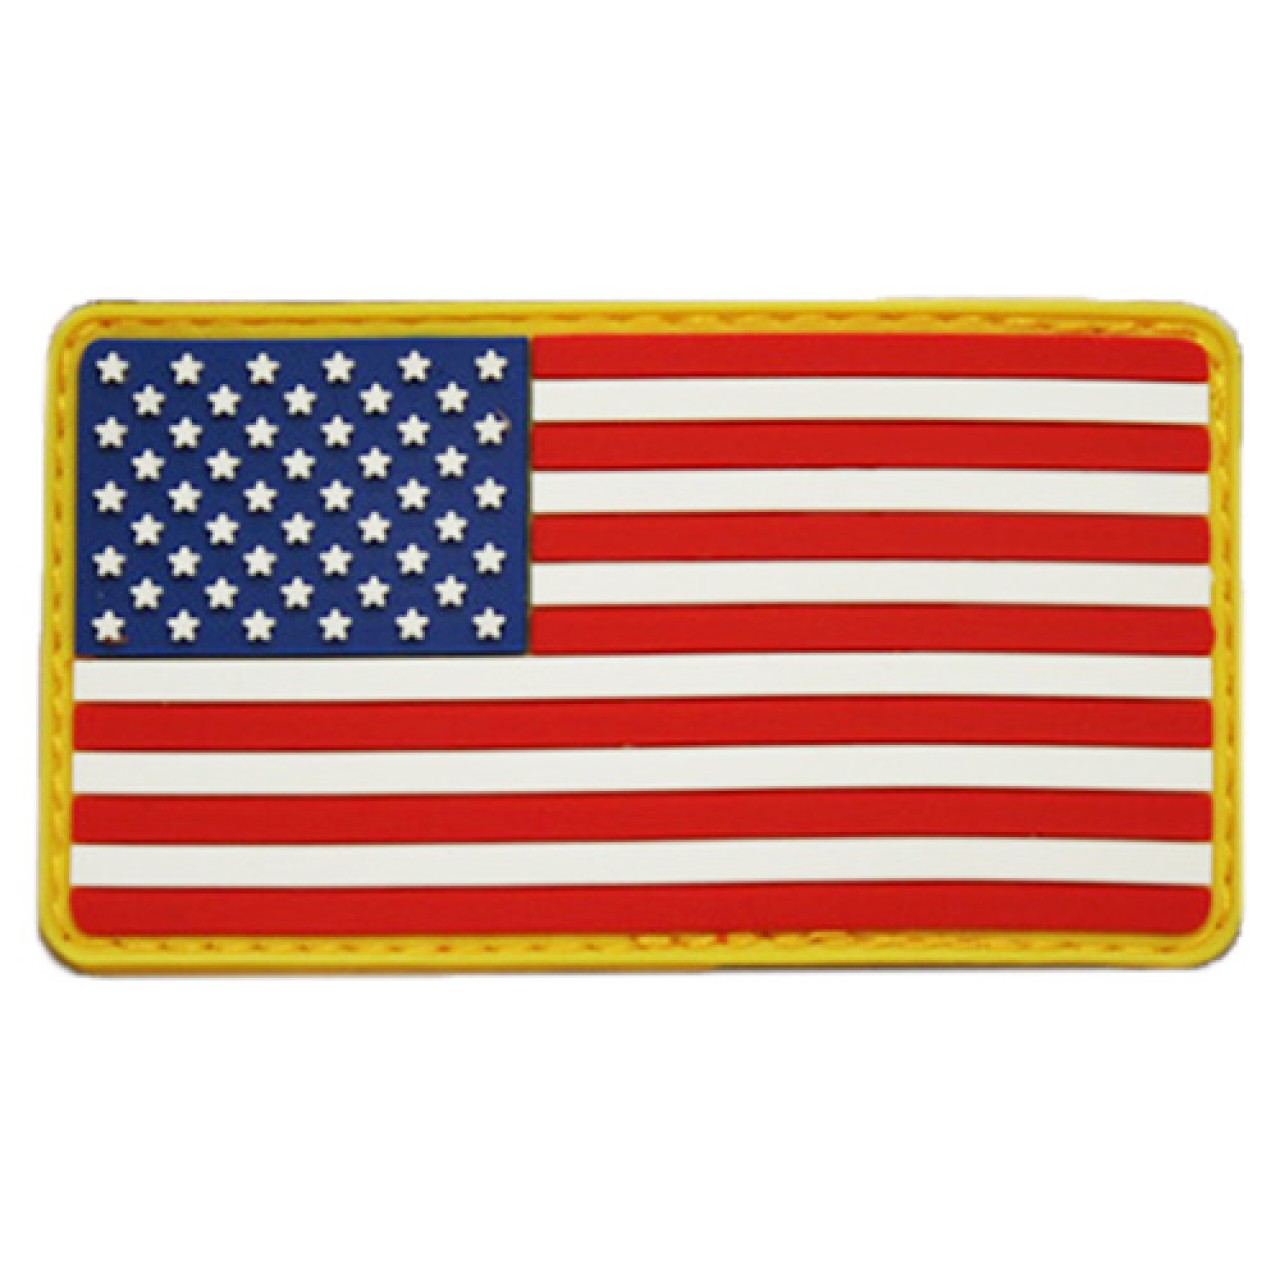 Nášivka vlajka USA plast farebná VELCRO